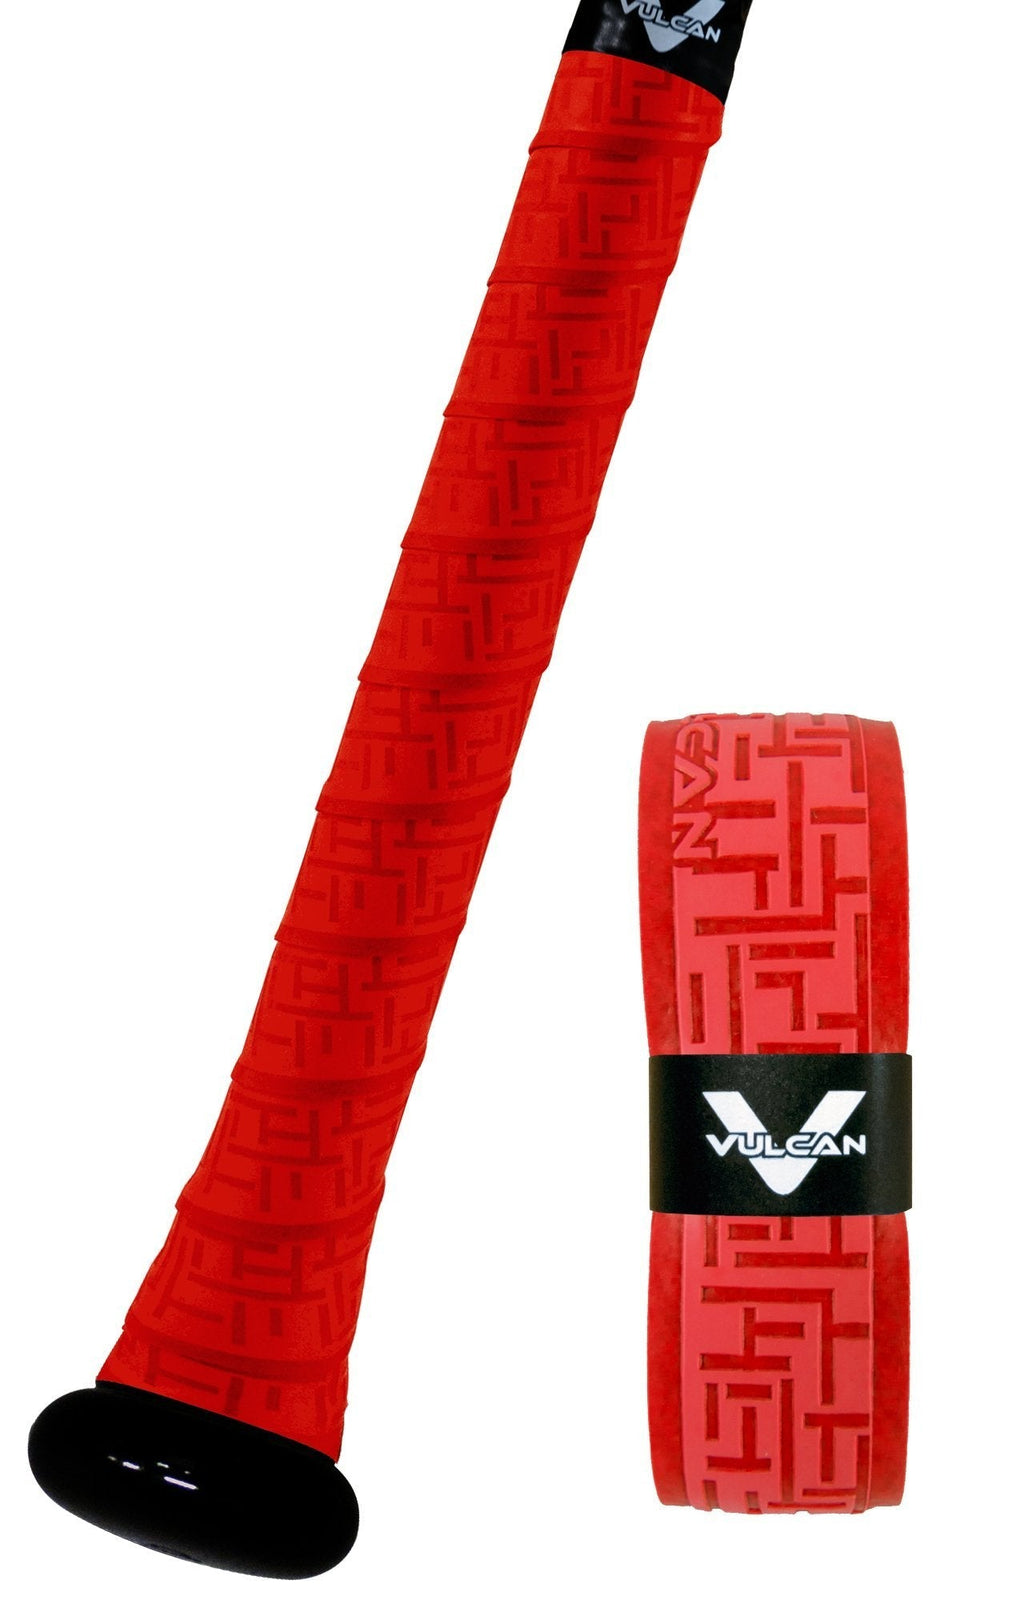 [AUSTRALIA] - Vulcan Bat Grip, Vulcan 1.75mm Bat Grip, Bright Red 